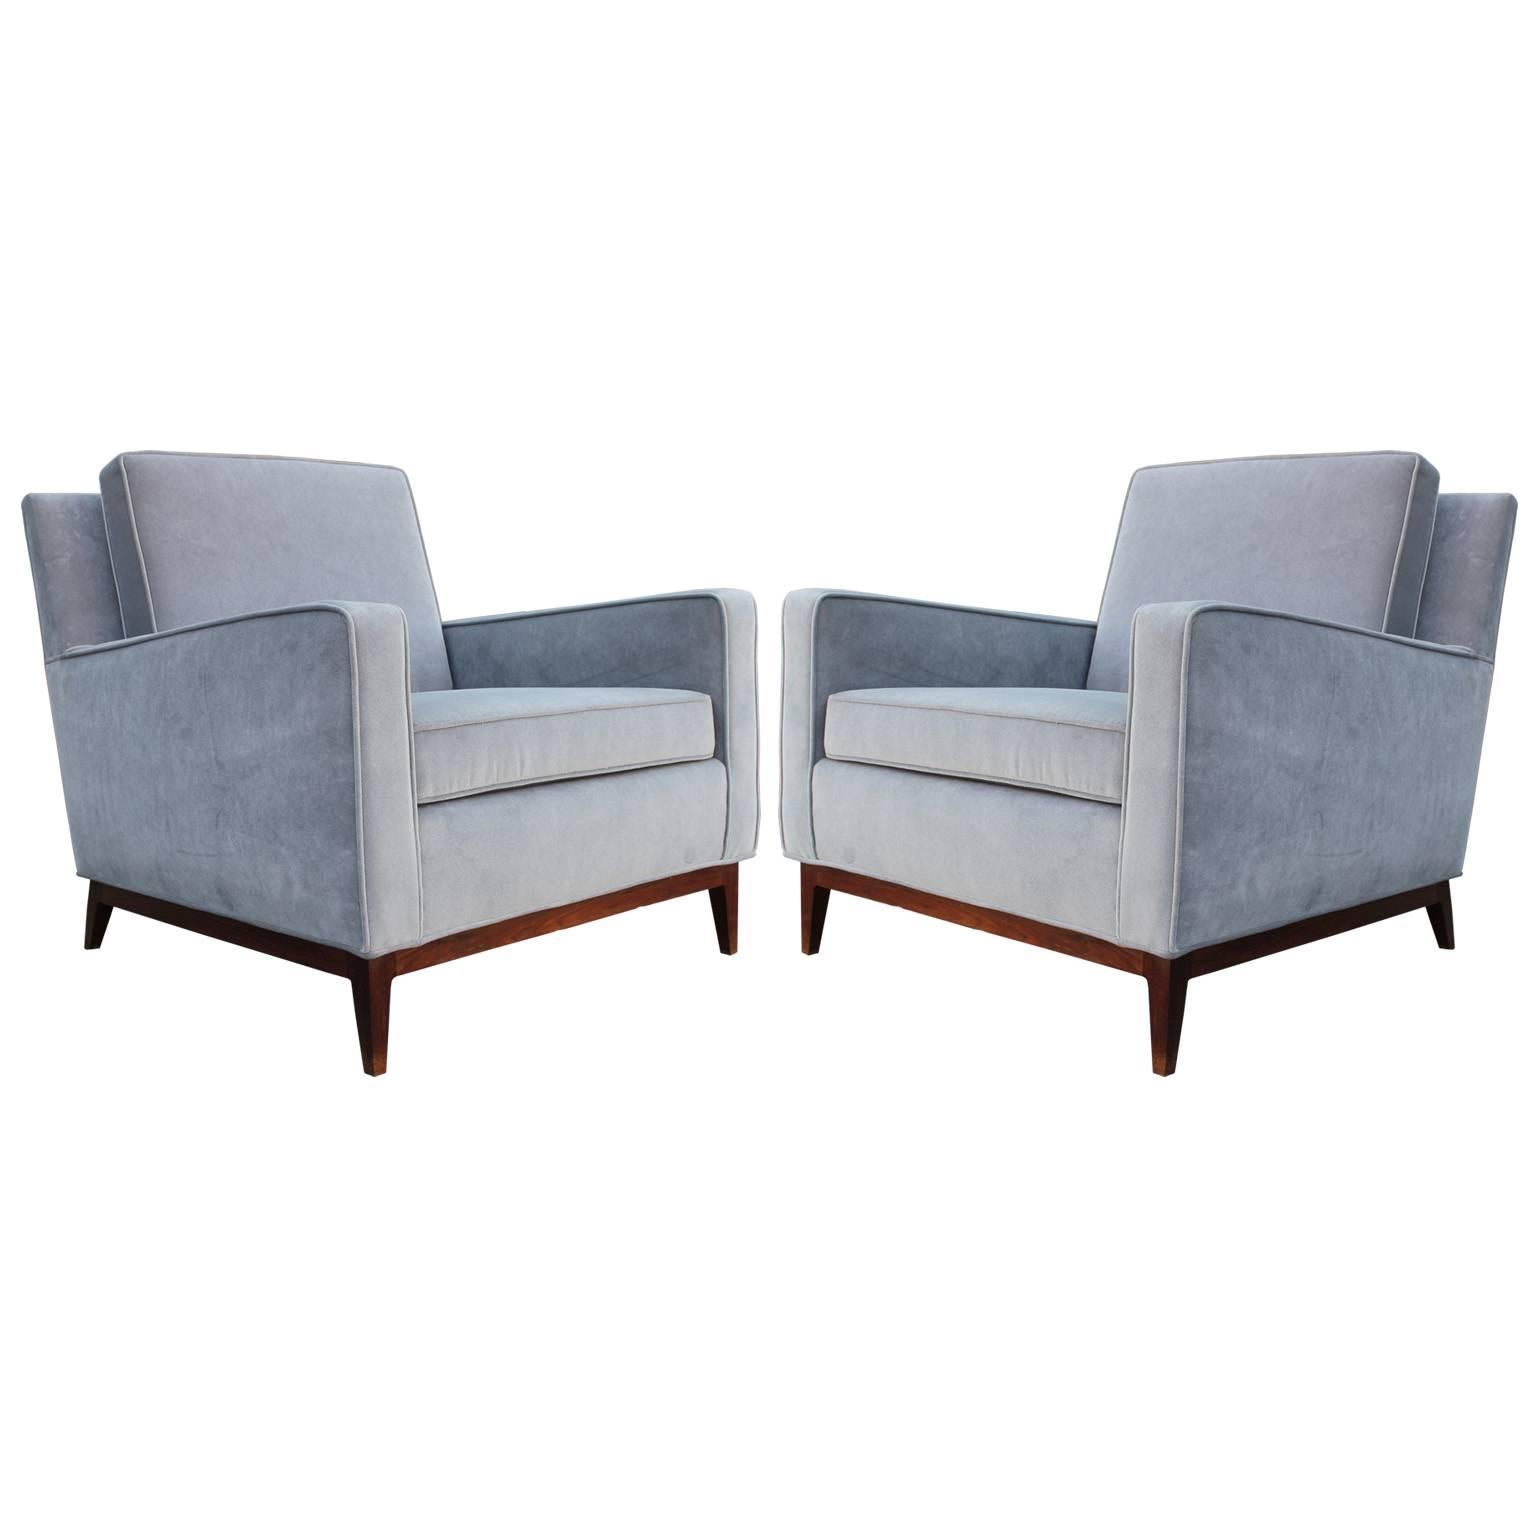 Fabulous Pair of Paul McCobb Modern Lounge Chairs in Gray Velvet and Walnut Base